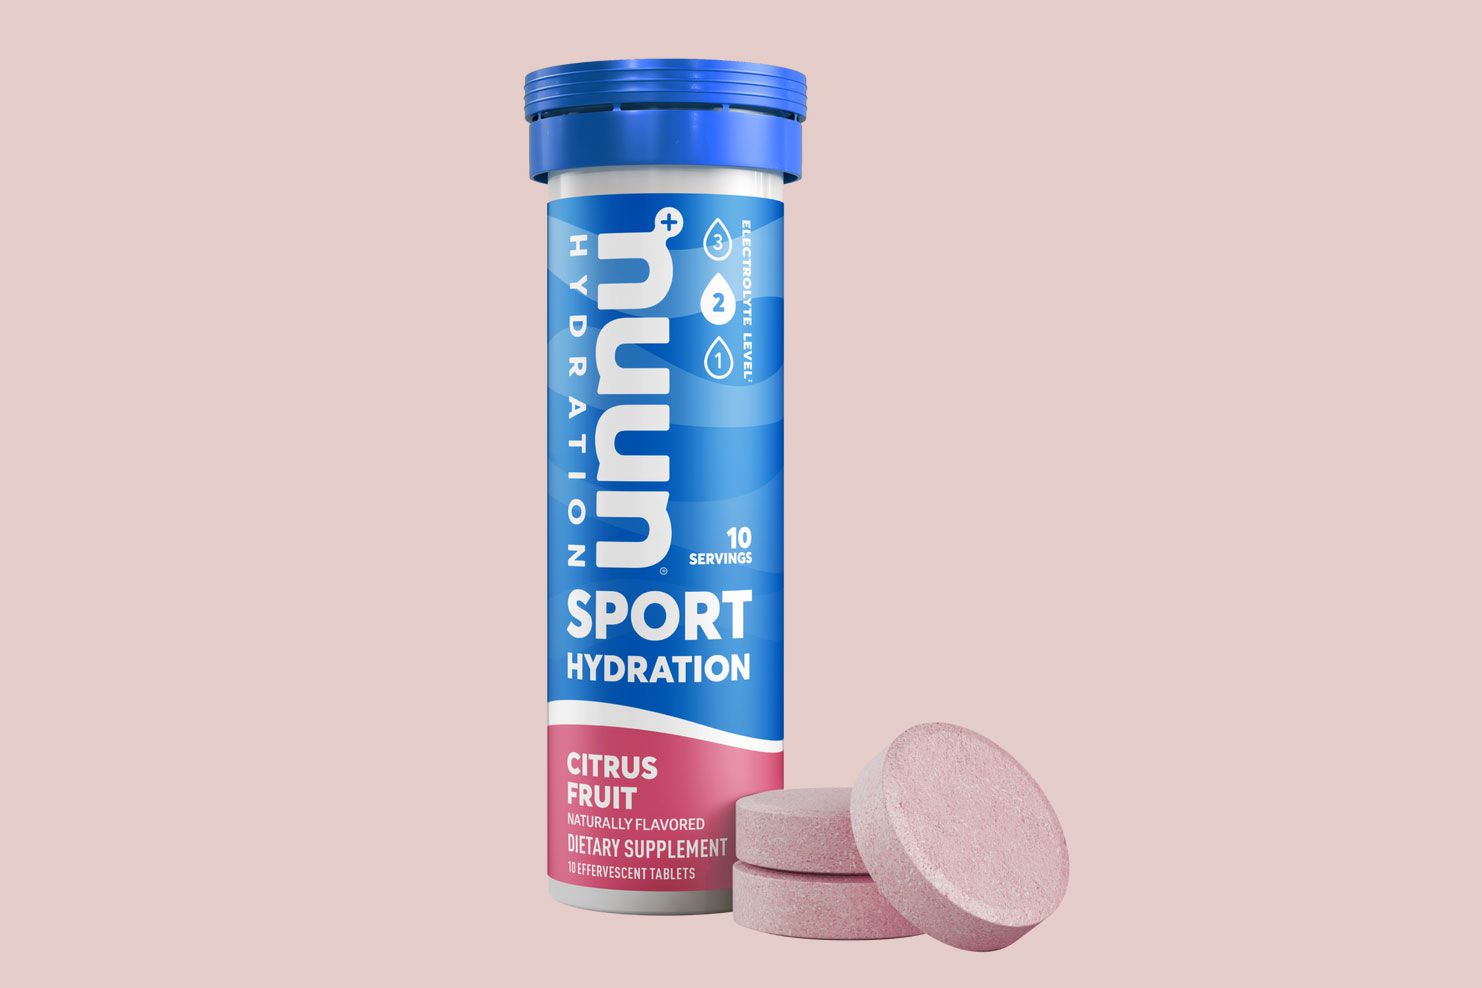 Nuun Sport hydration tablets